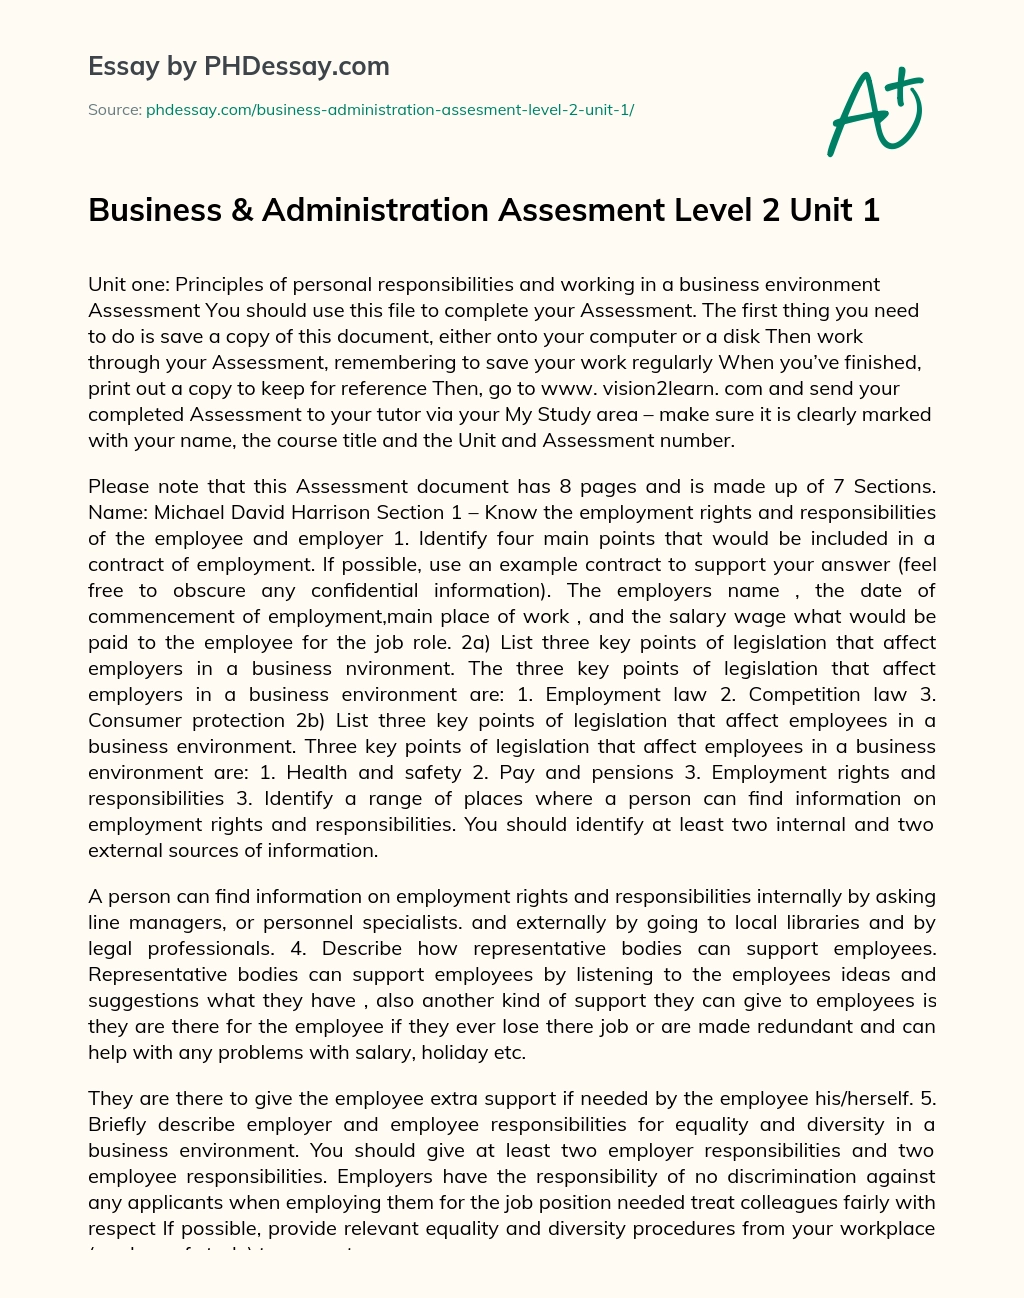 Business & Administration Assesment Level 2 Unit 1 essay